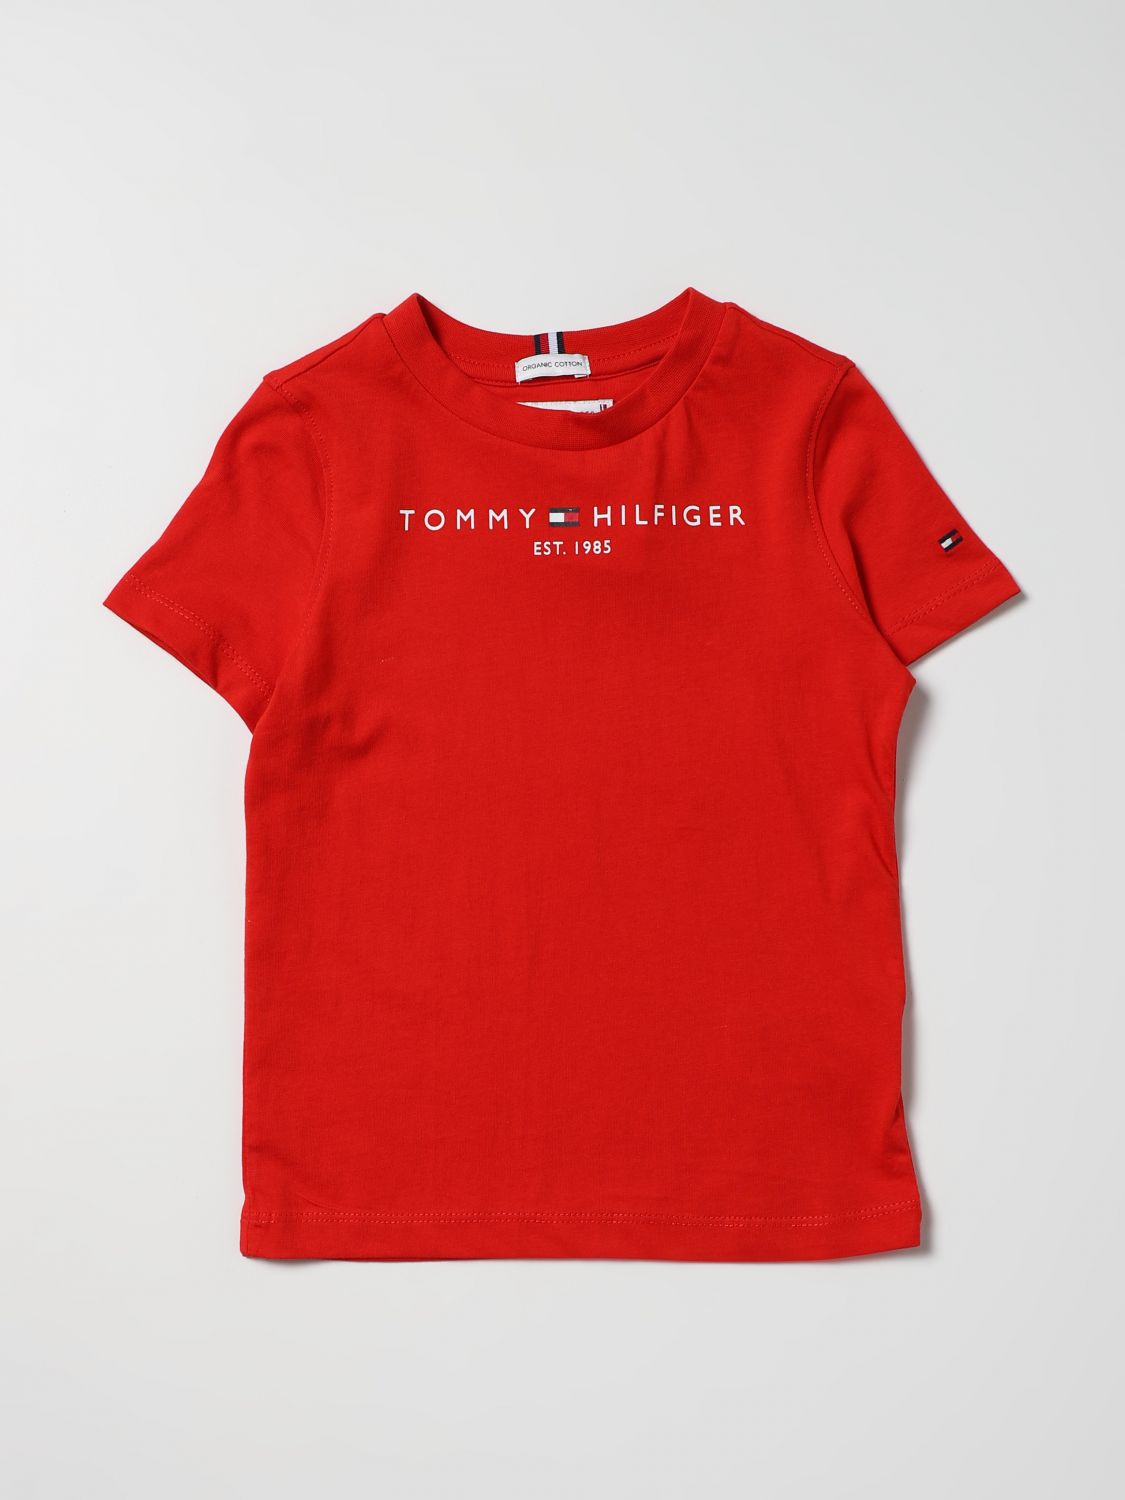 TOMMY HILFIGER: T-shirt kids - Red | Tommy Hilfiger t-shirt online on GIGLIO.COM